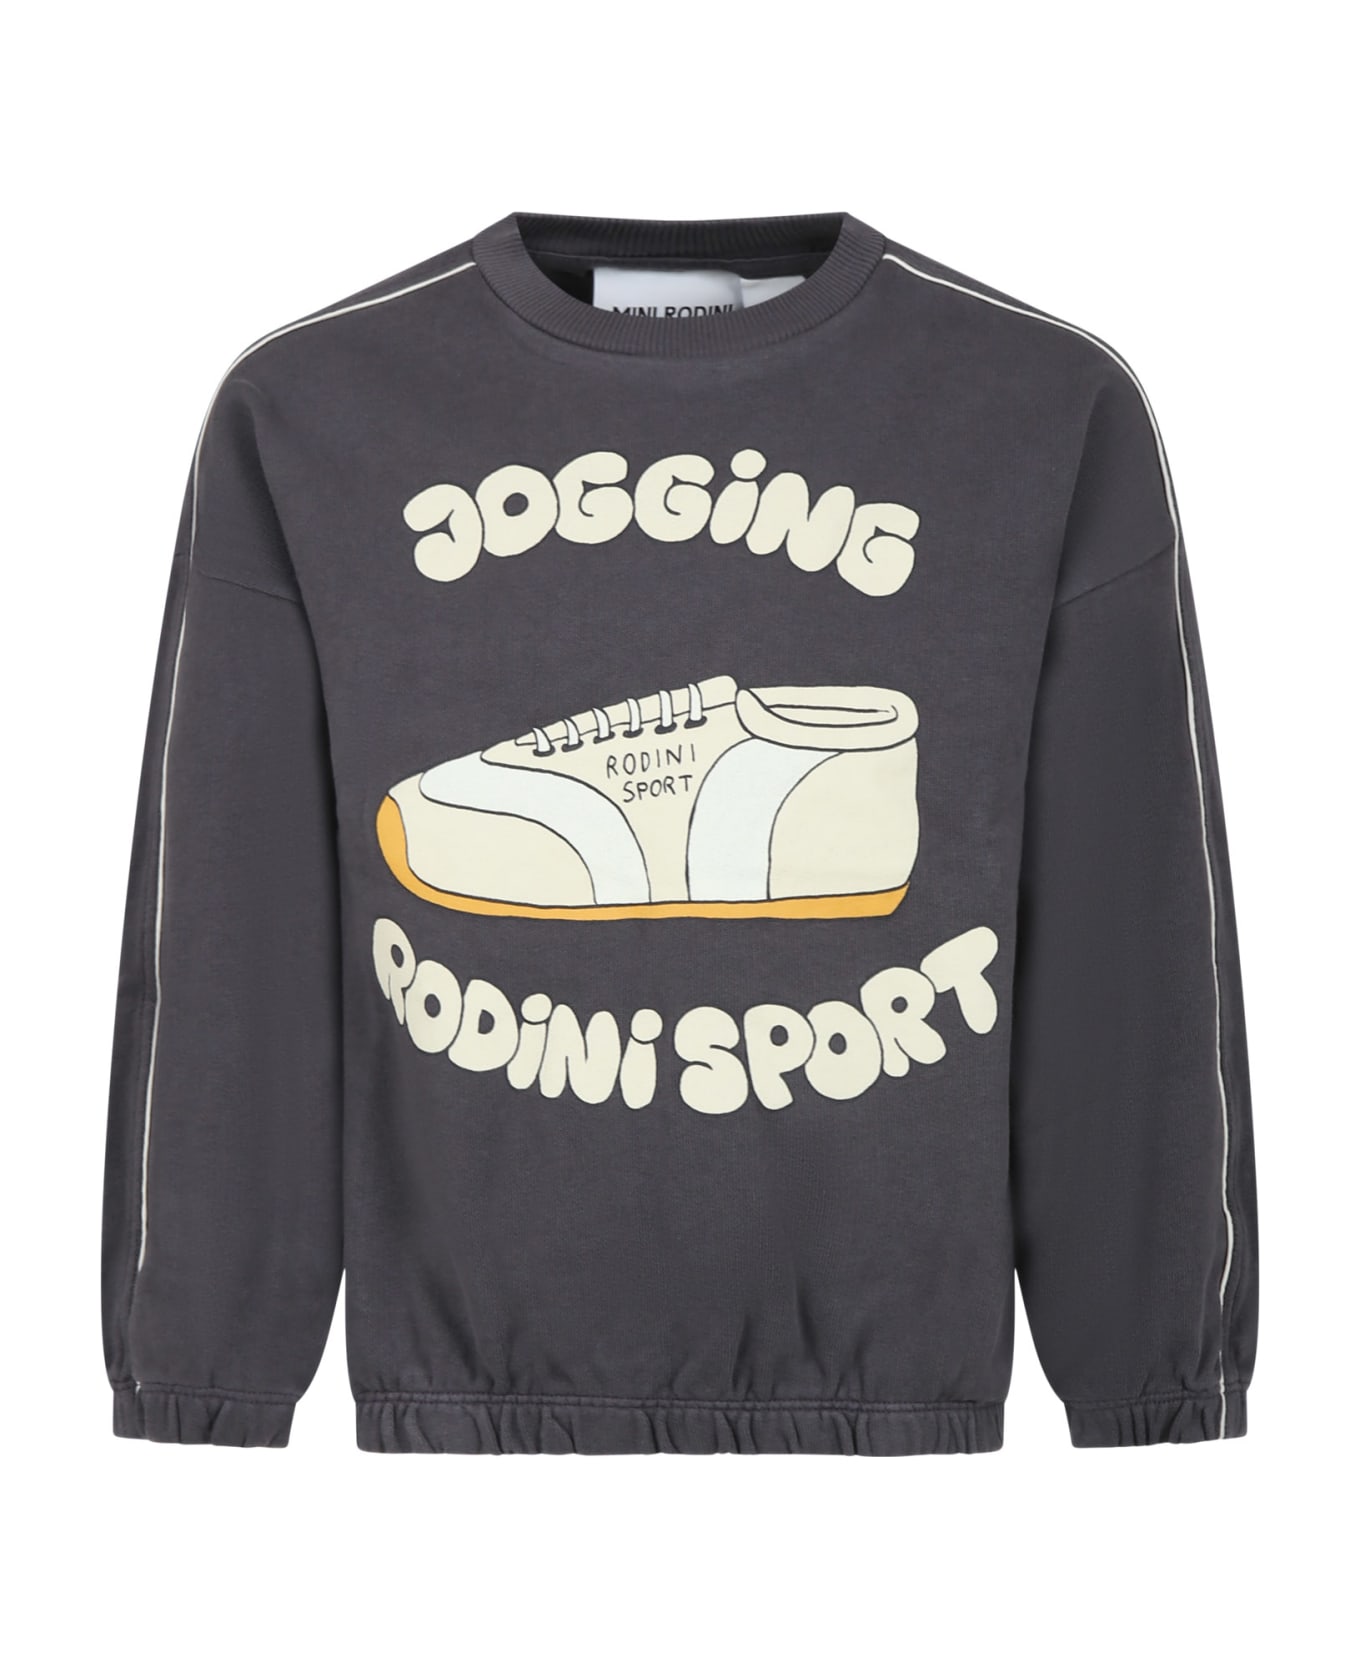 Mini Rodini Gray Sweatshirt For Kids With Jogging Sneakers Print - Grey